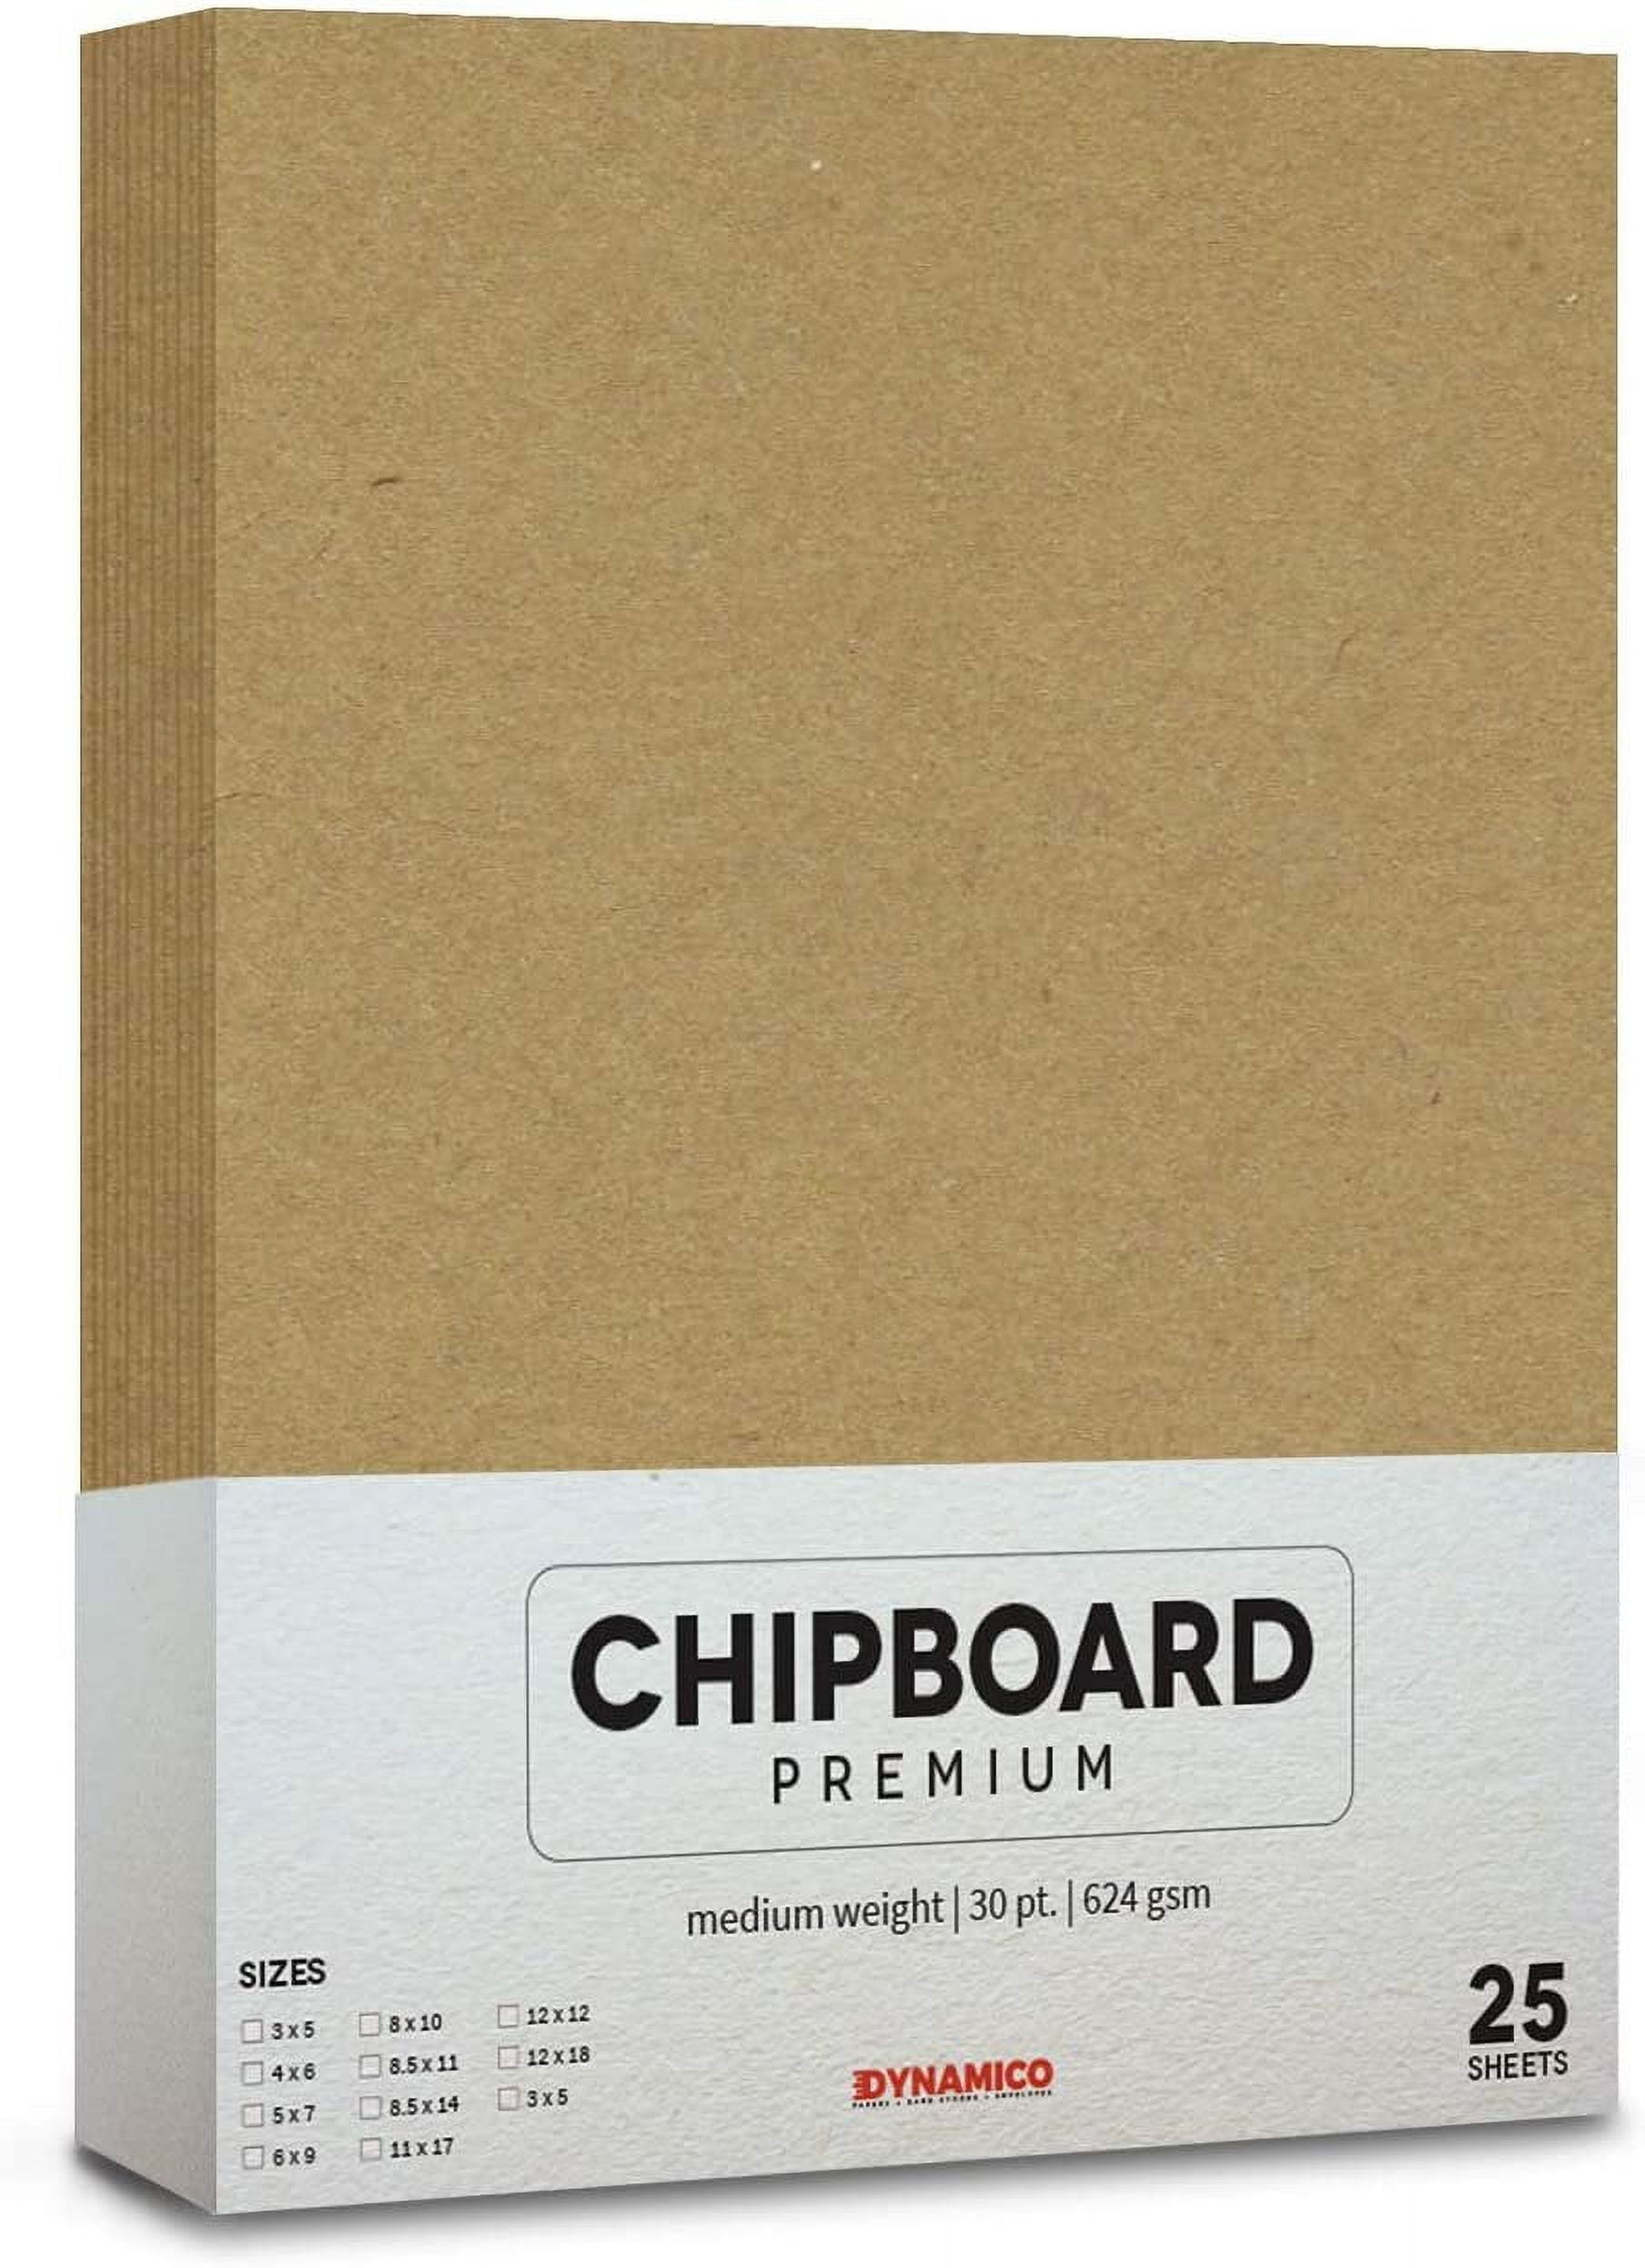 Backing & display board  Cardboard for bookbinding